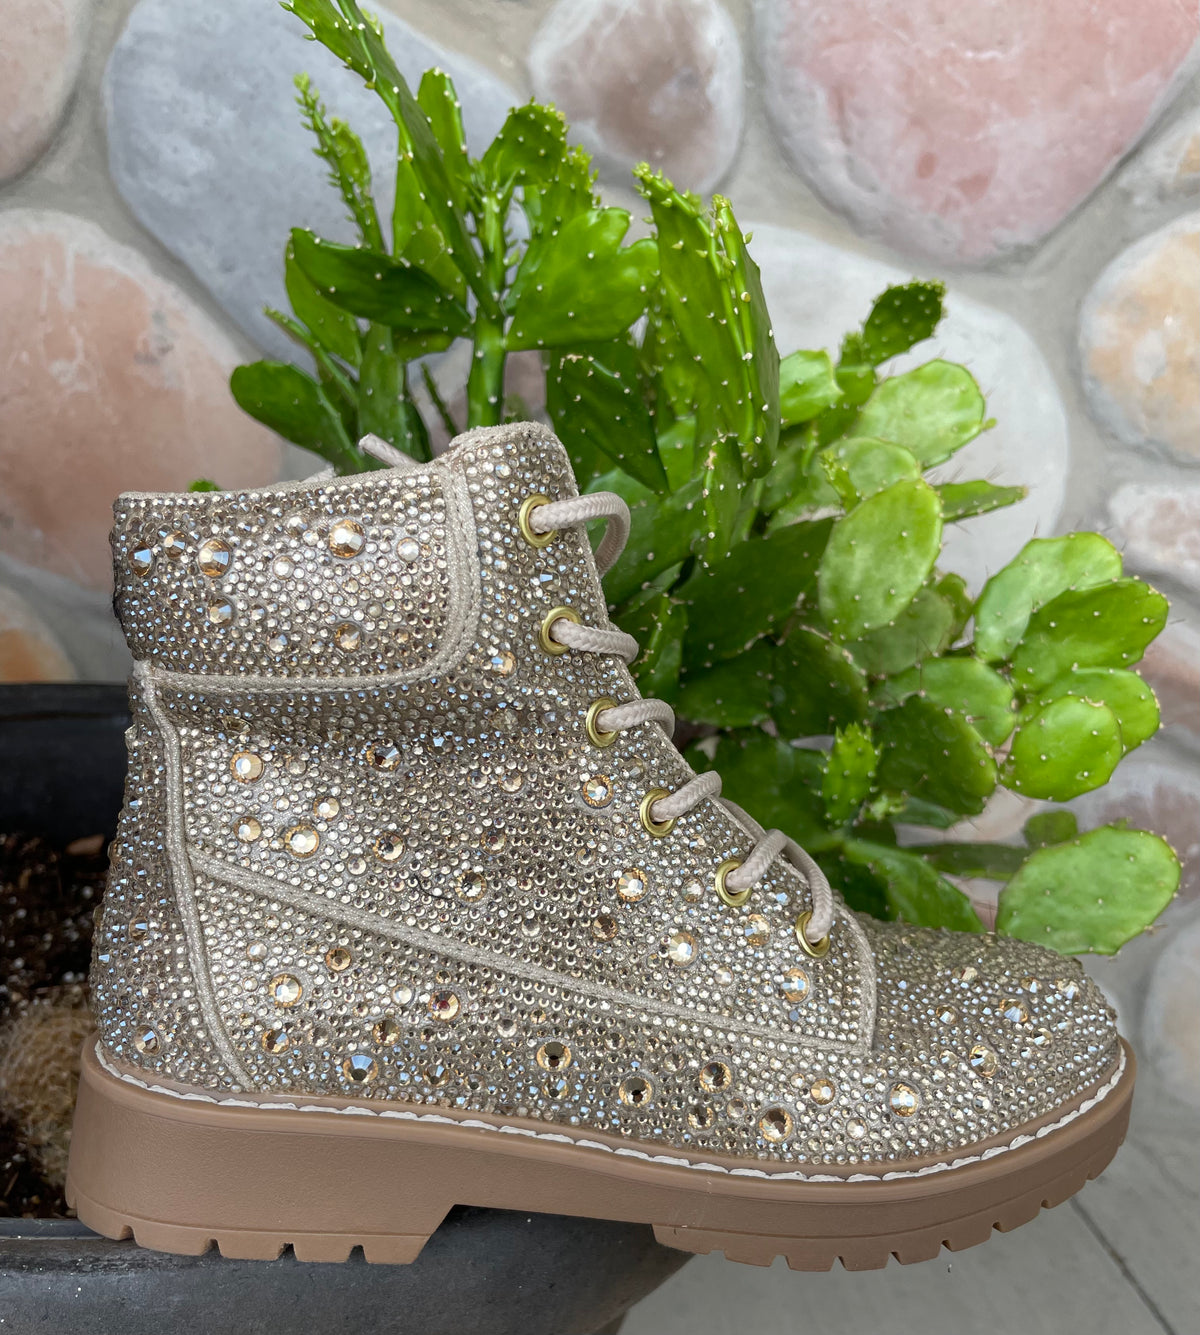 Gold Rockstar Boots by Betsey Johnson- Children's boot